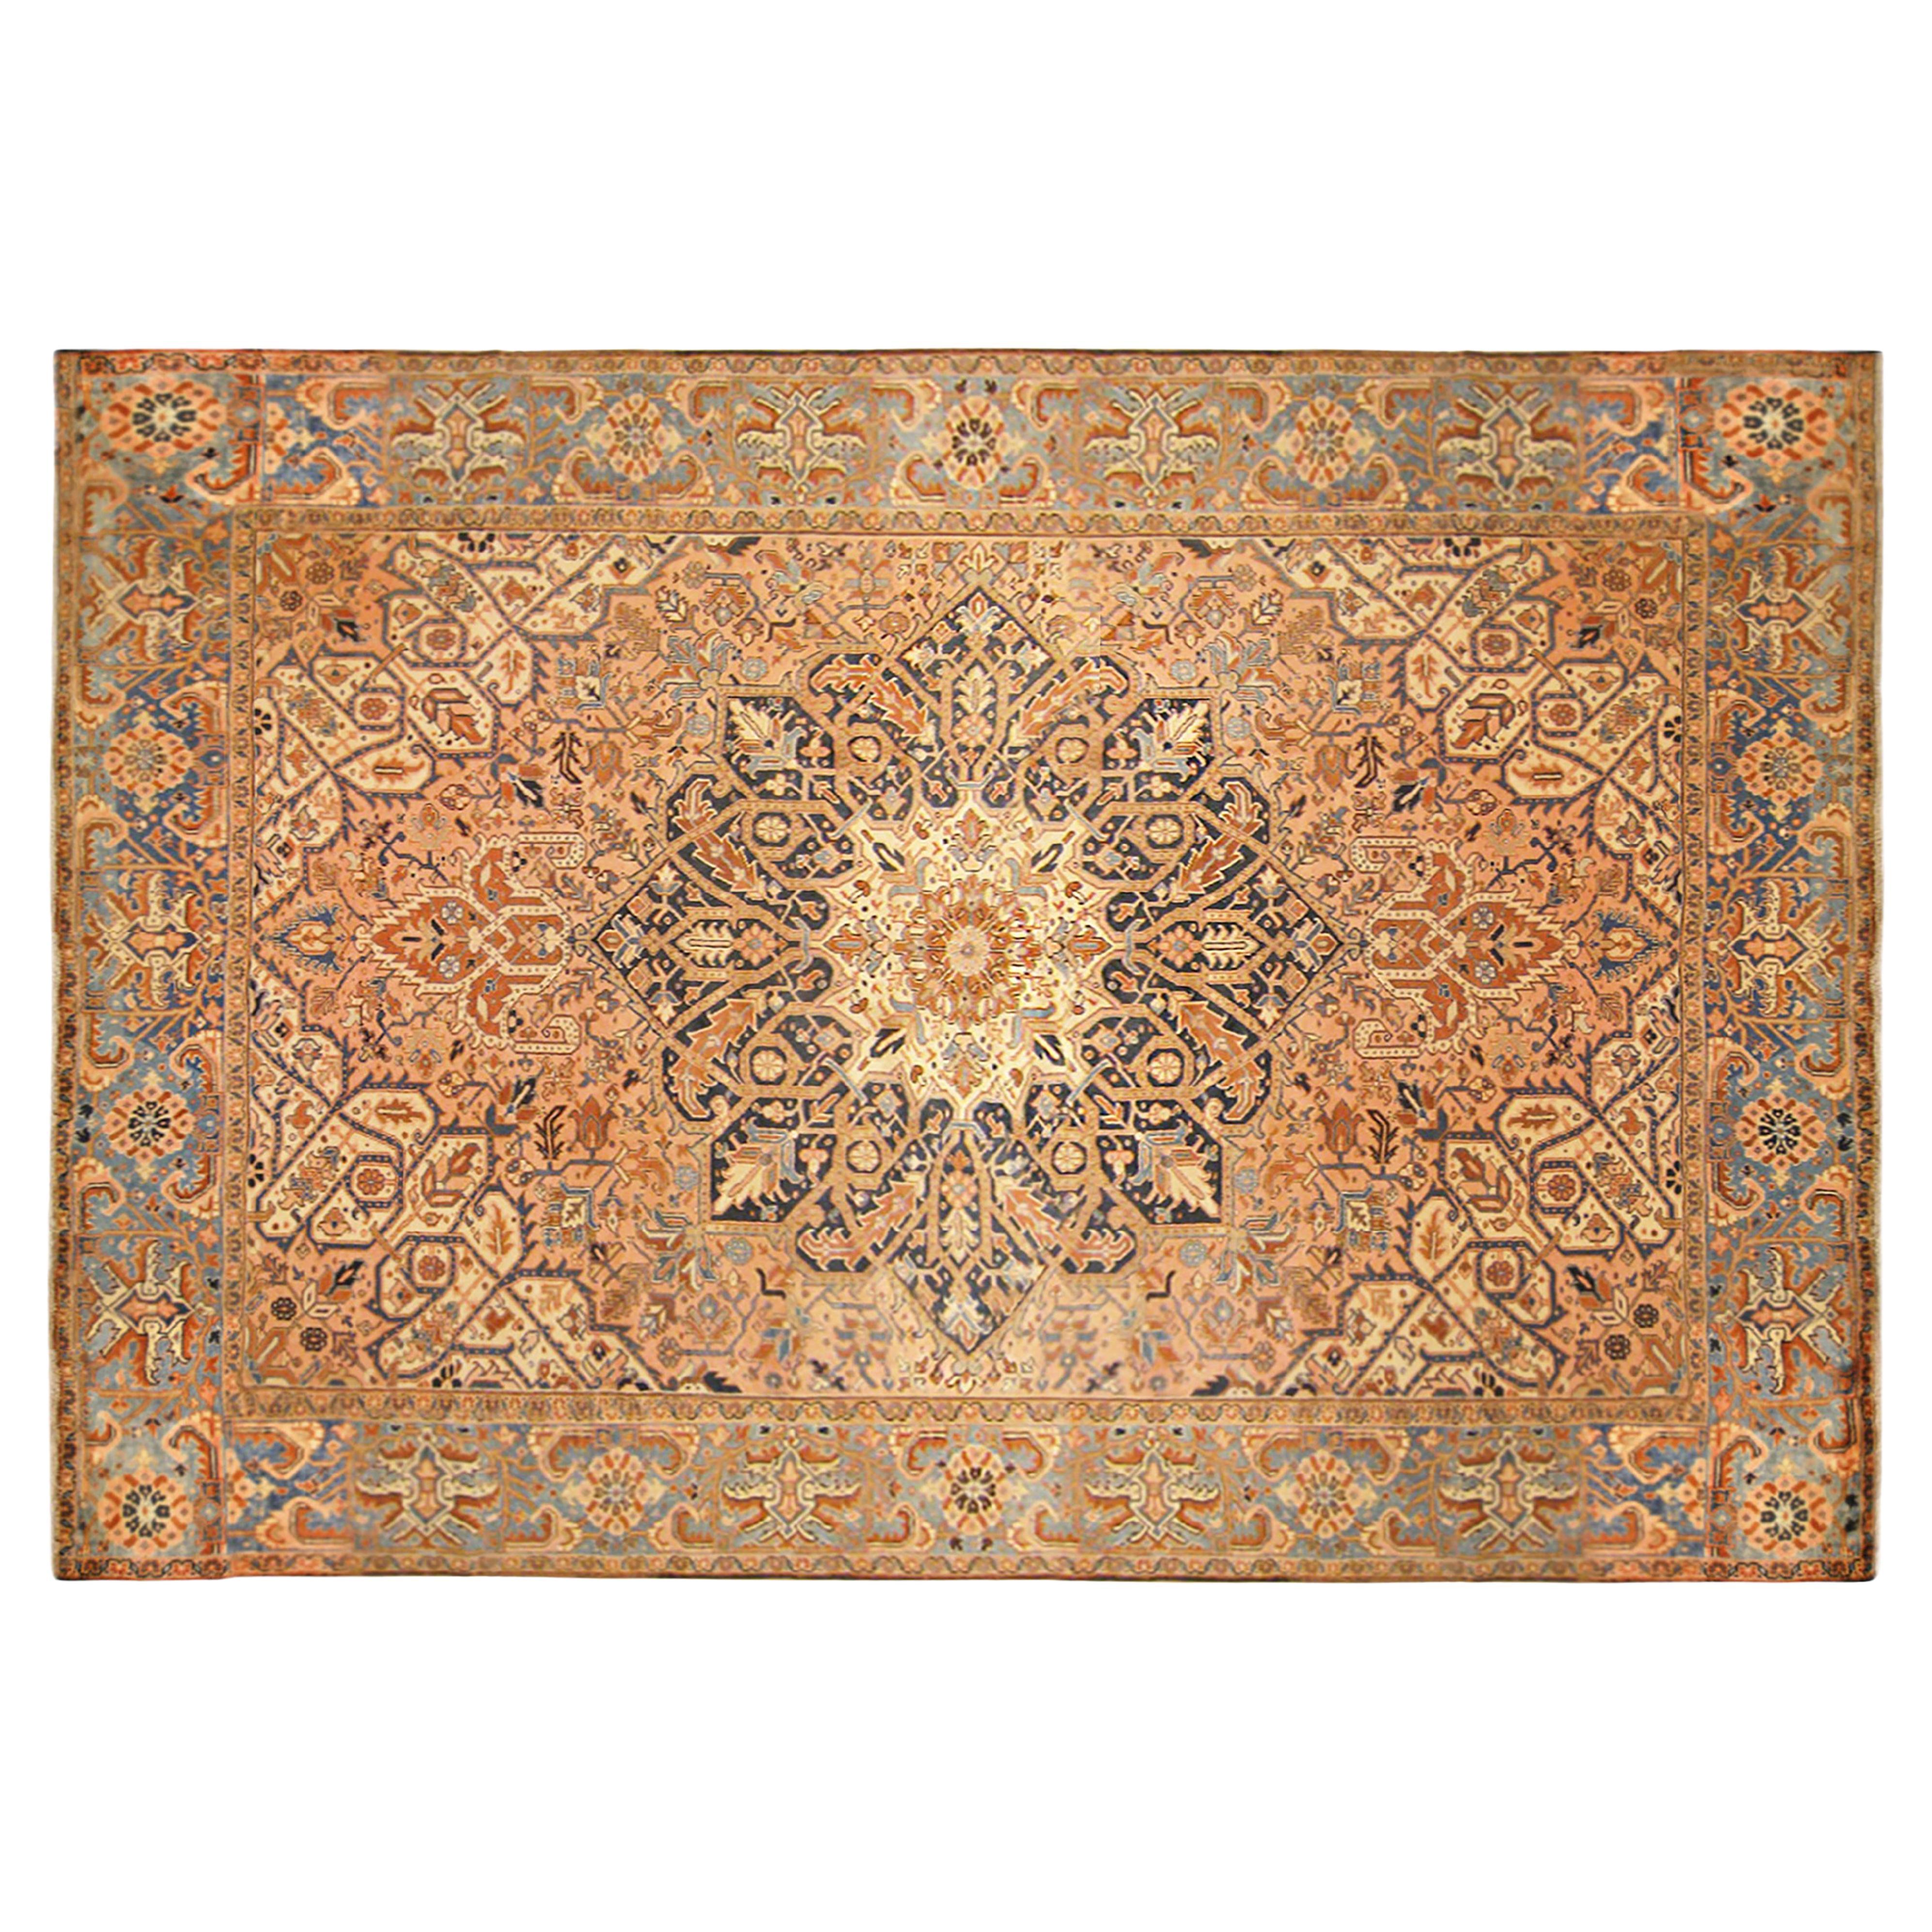 Persischer dekorativer orientalischer Heriz-Teppich in Großformat, Vintage